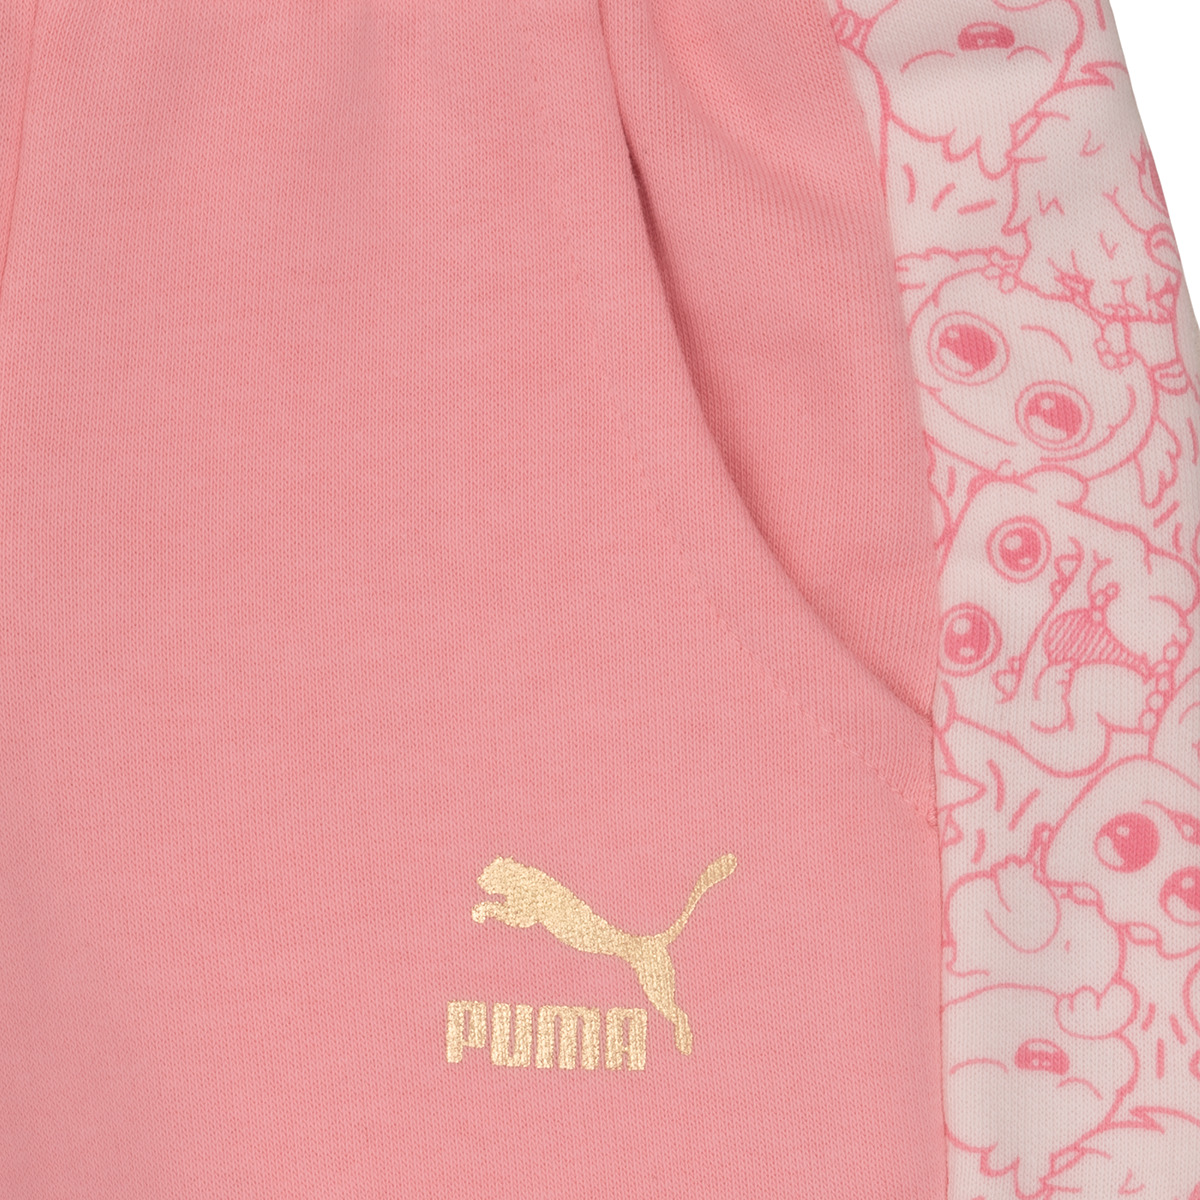 Puma Rose MONSTER SWEAT PANT GIRL zBLJW5sJ